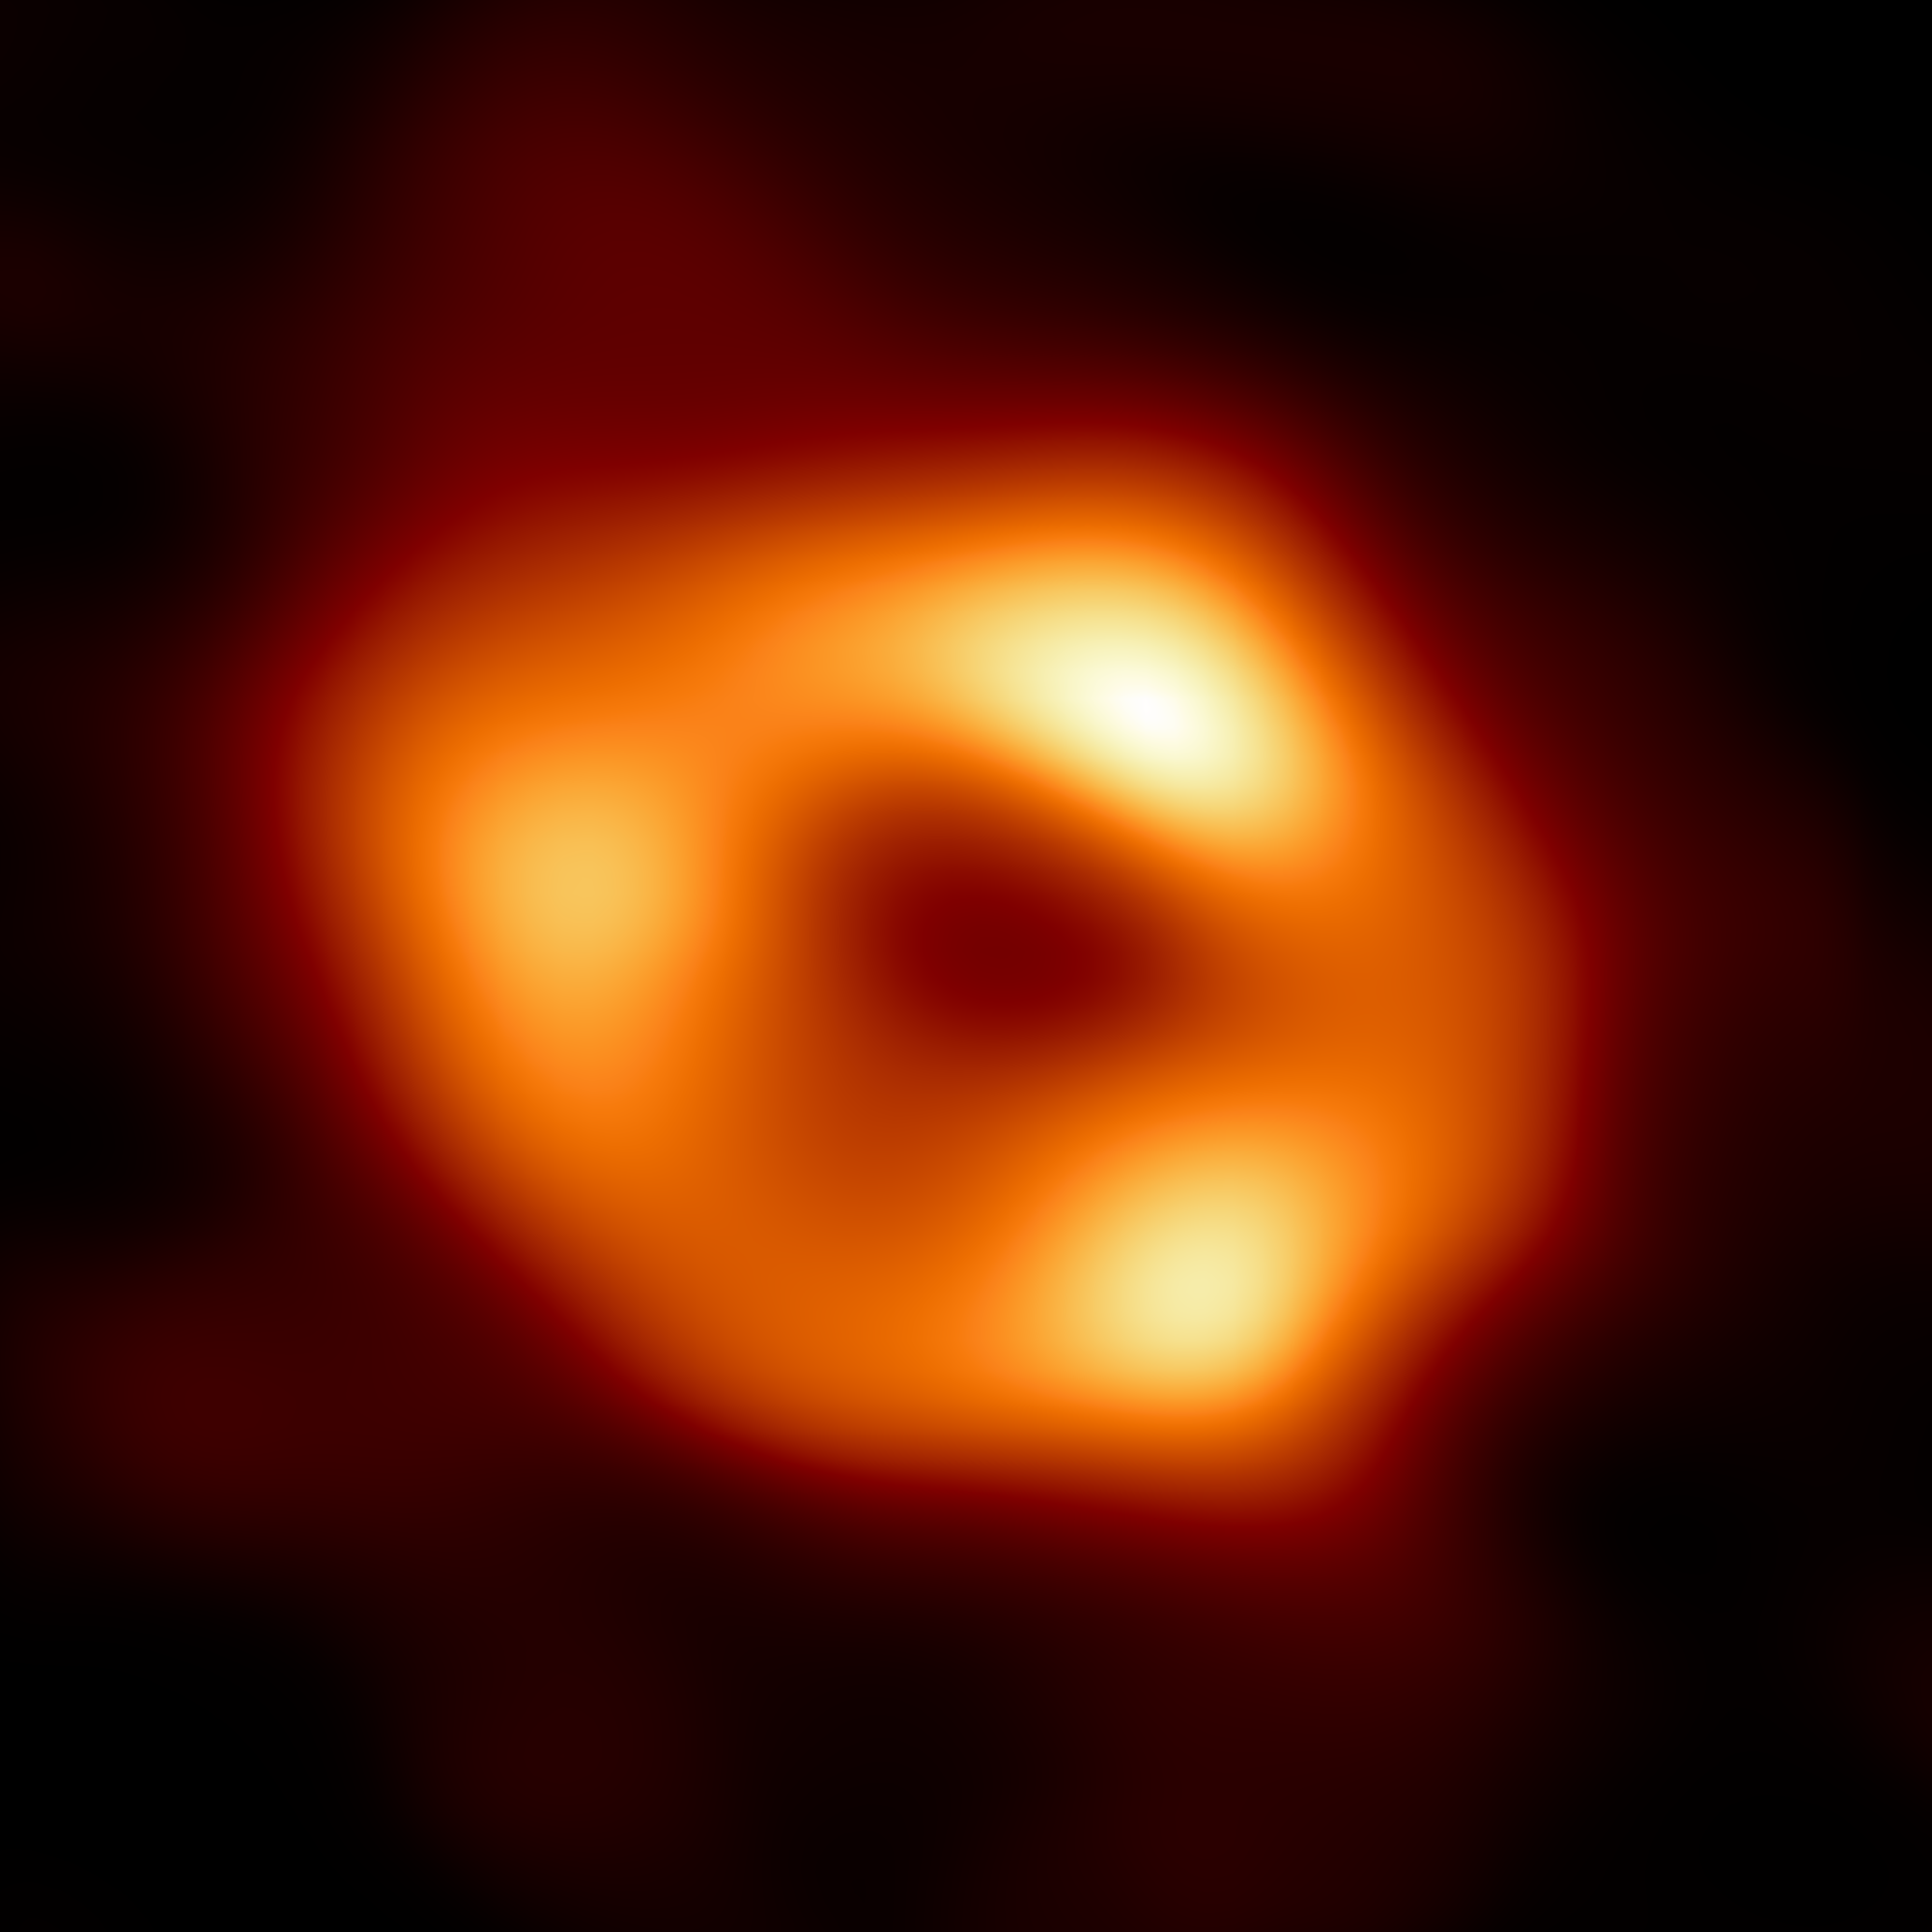 Imaging a supermassive black hole